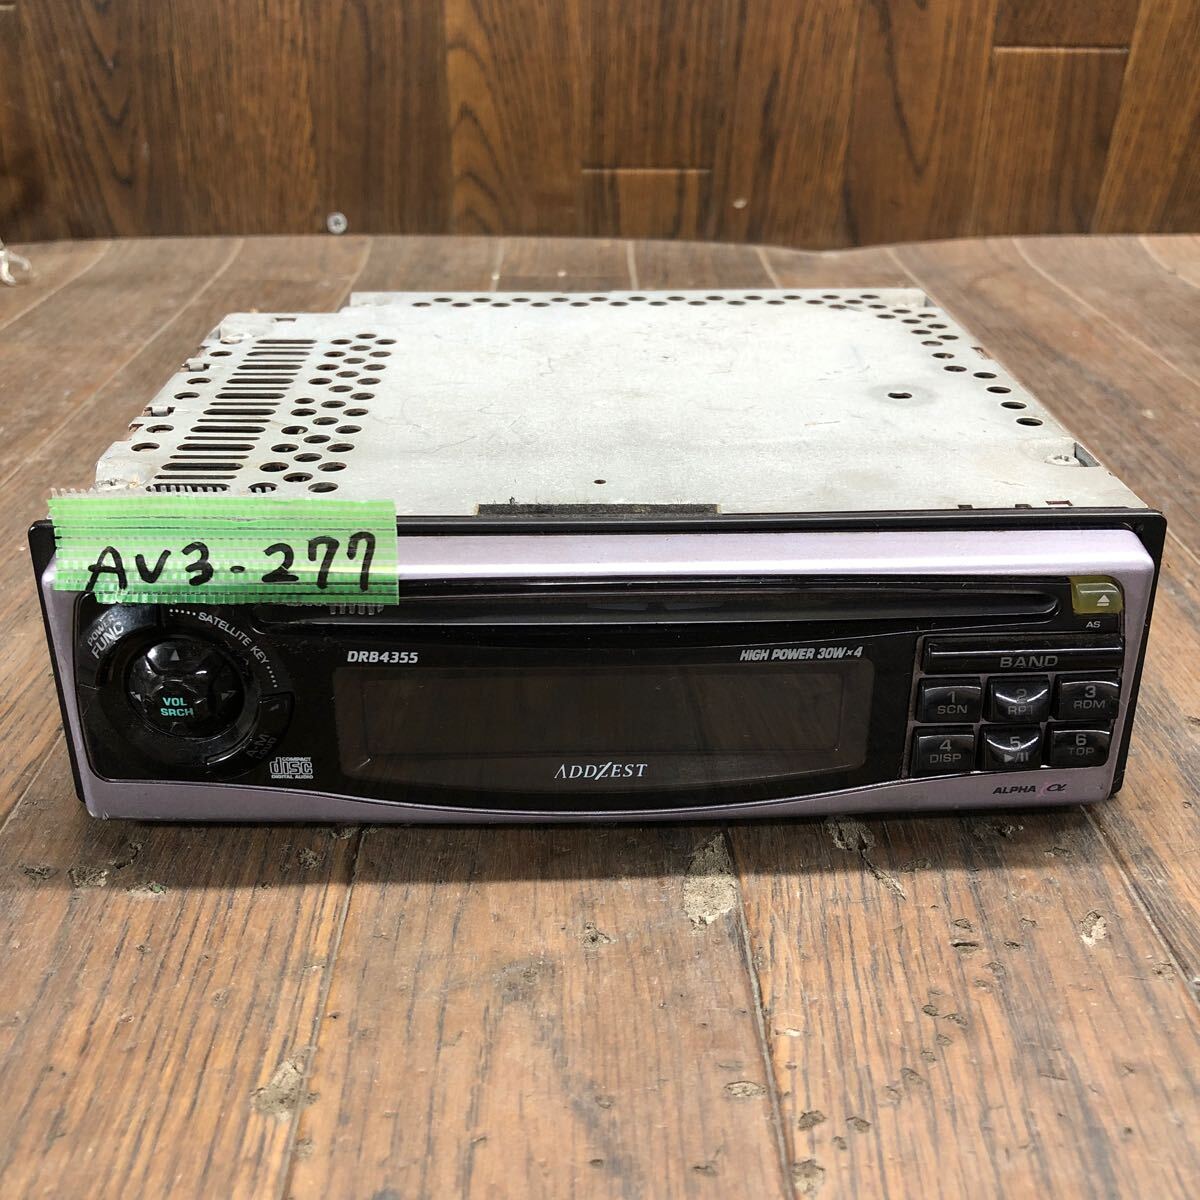 AV3-277 super-discount car stereo CD player ADDZEST DRB 4355 0002051 CD FM/AM electrification not yet verification Junk 